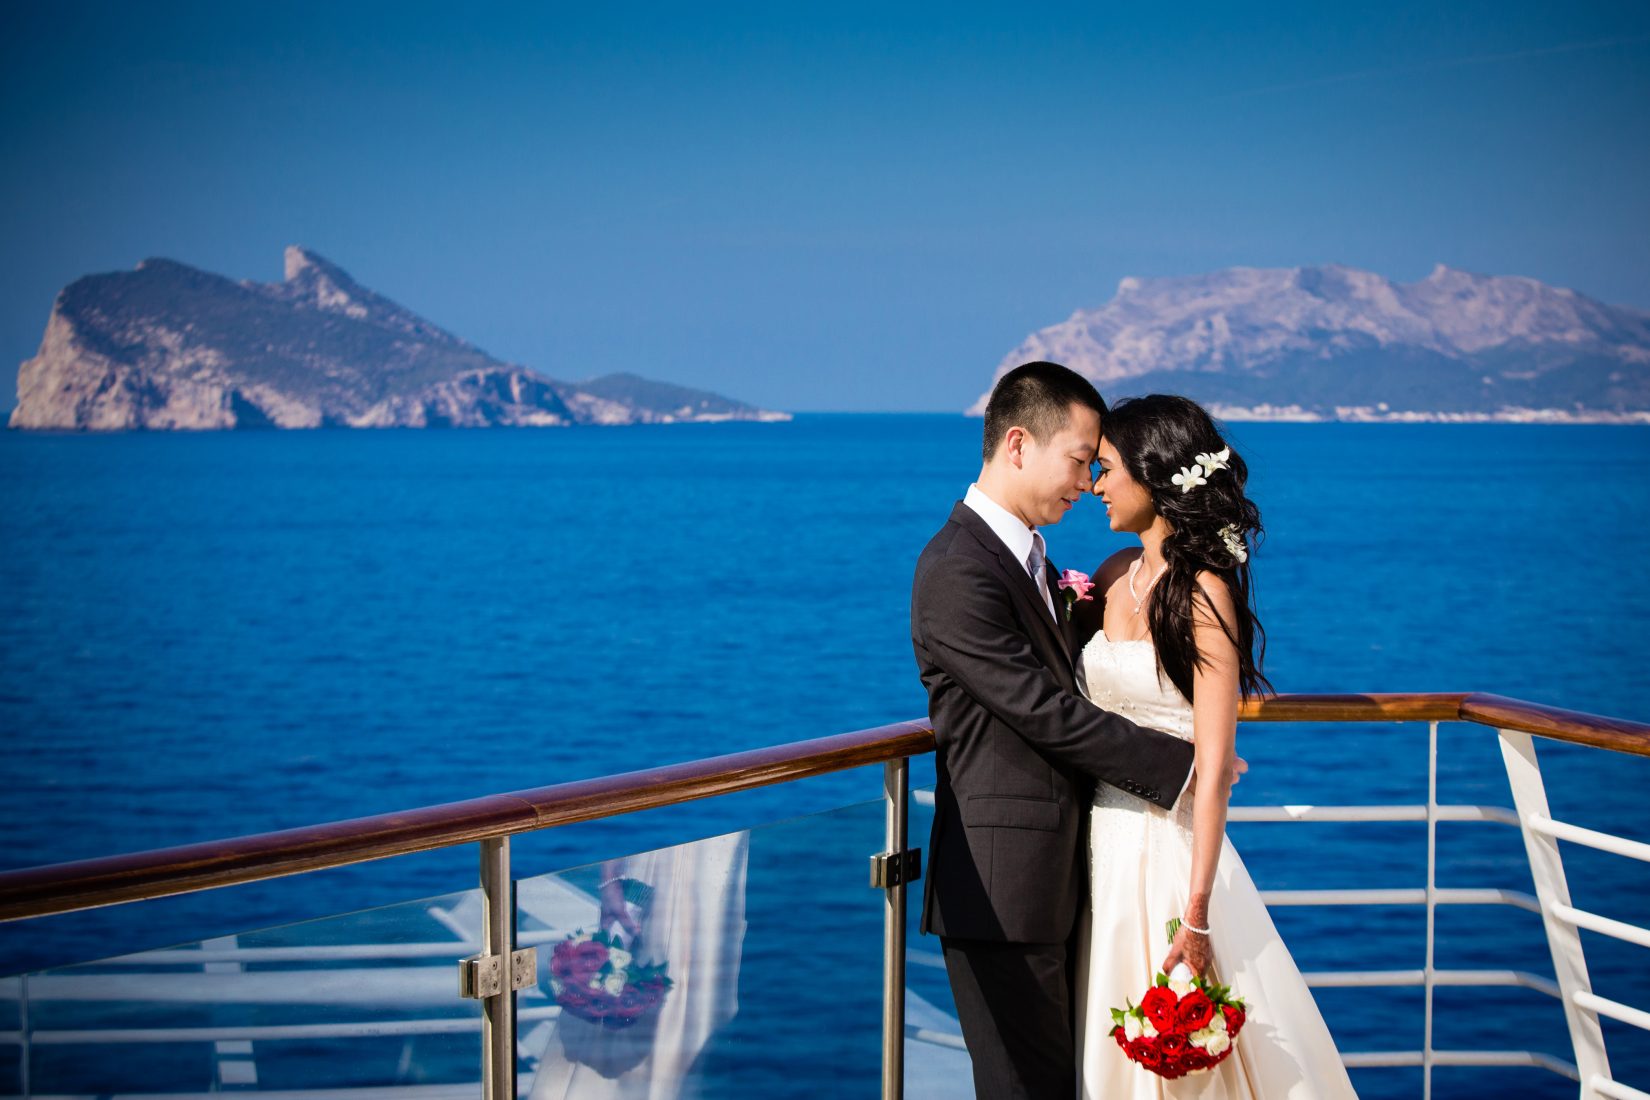 is a cruise ship wedding legal